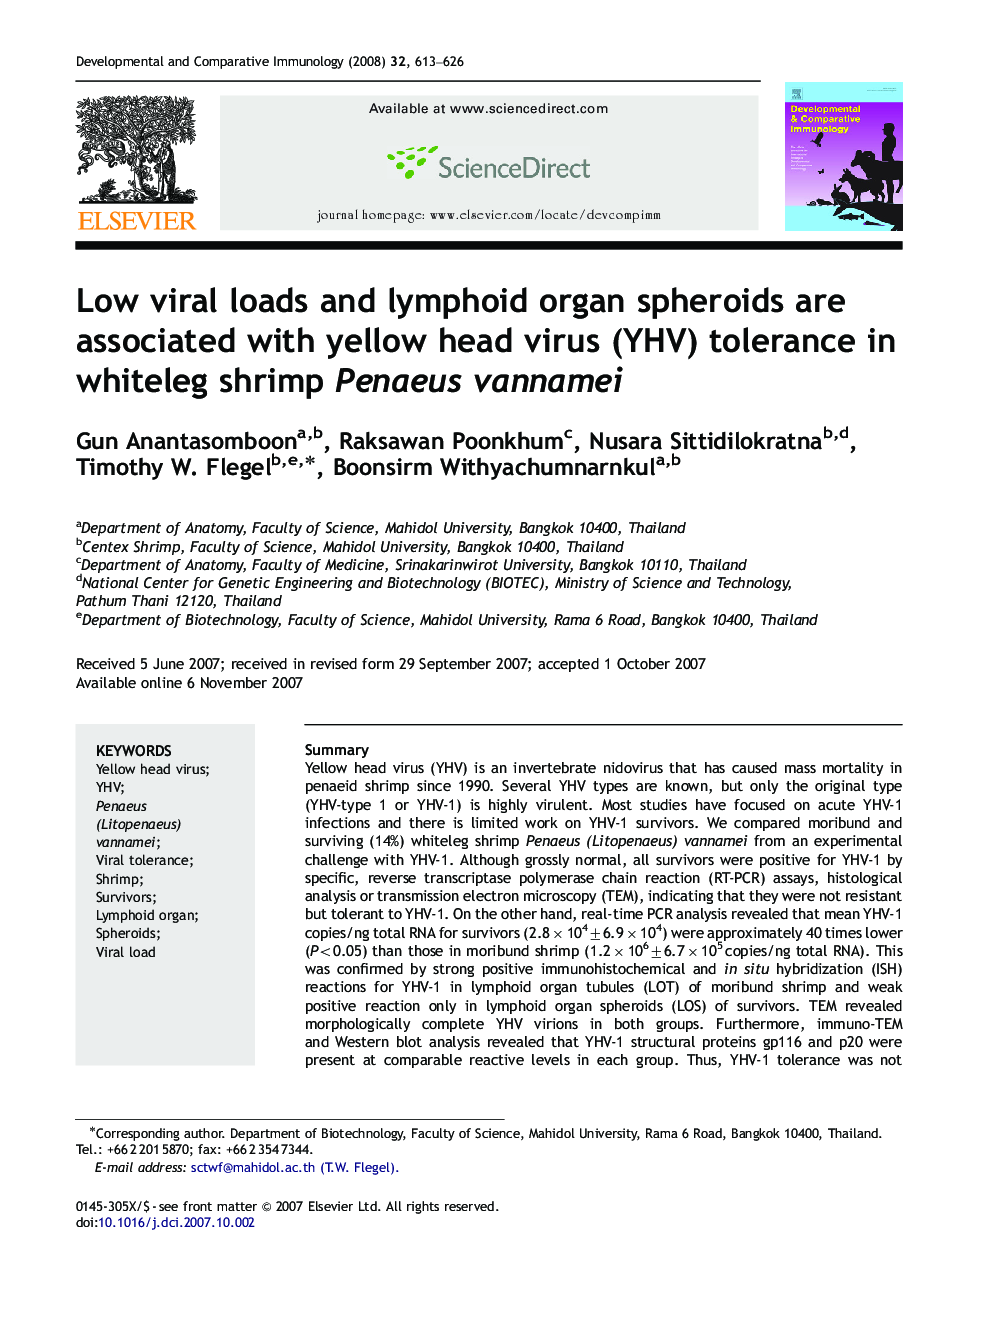 Low viral loads and lymphoid organ spheroids are associated with yellow head virus (YHV) tolerance in whiteleg shrimp Penaeus vannamei